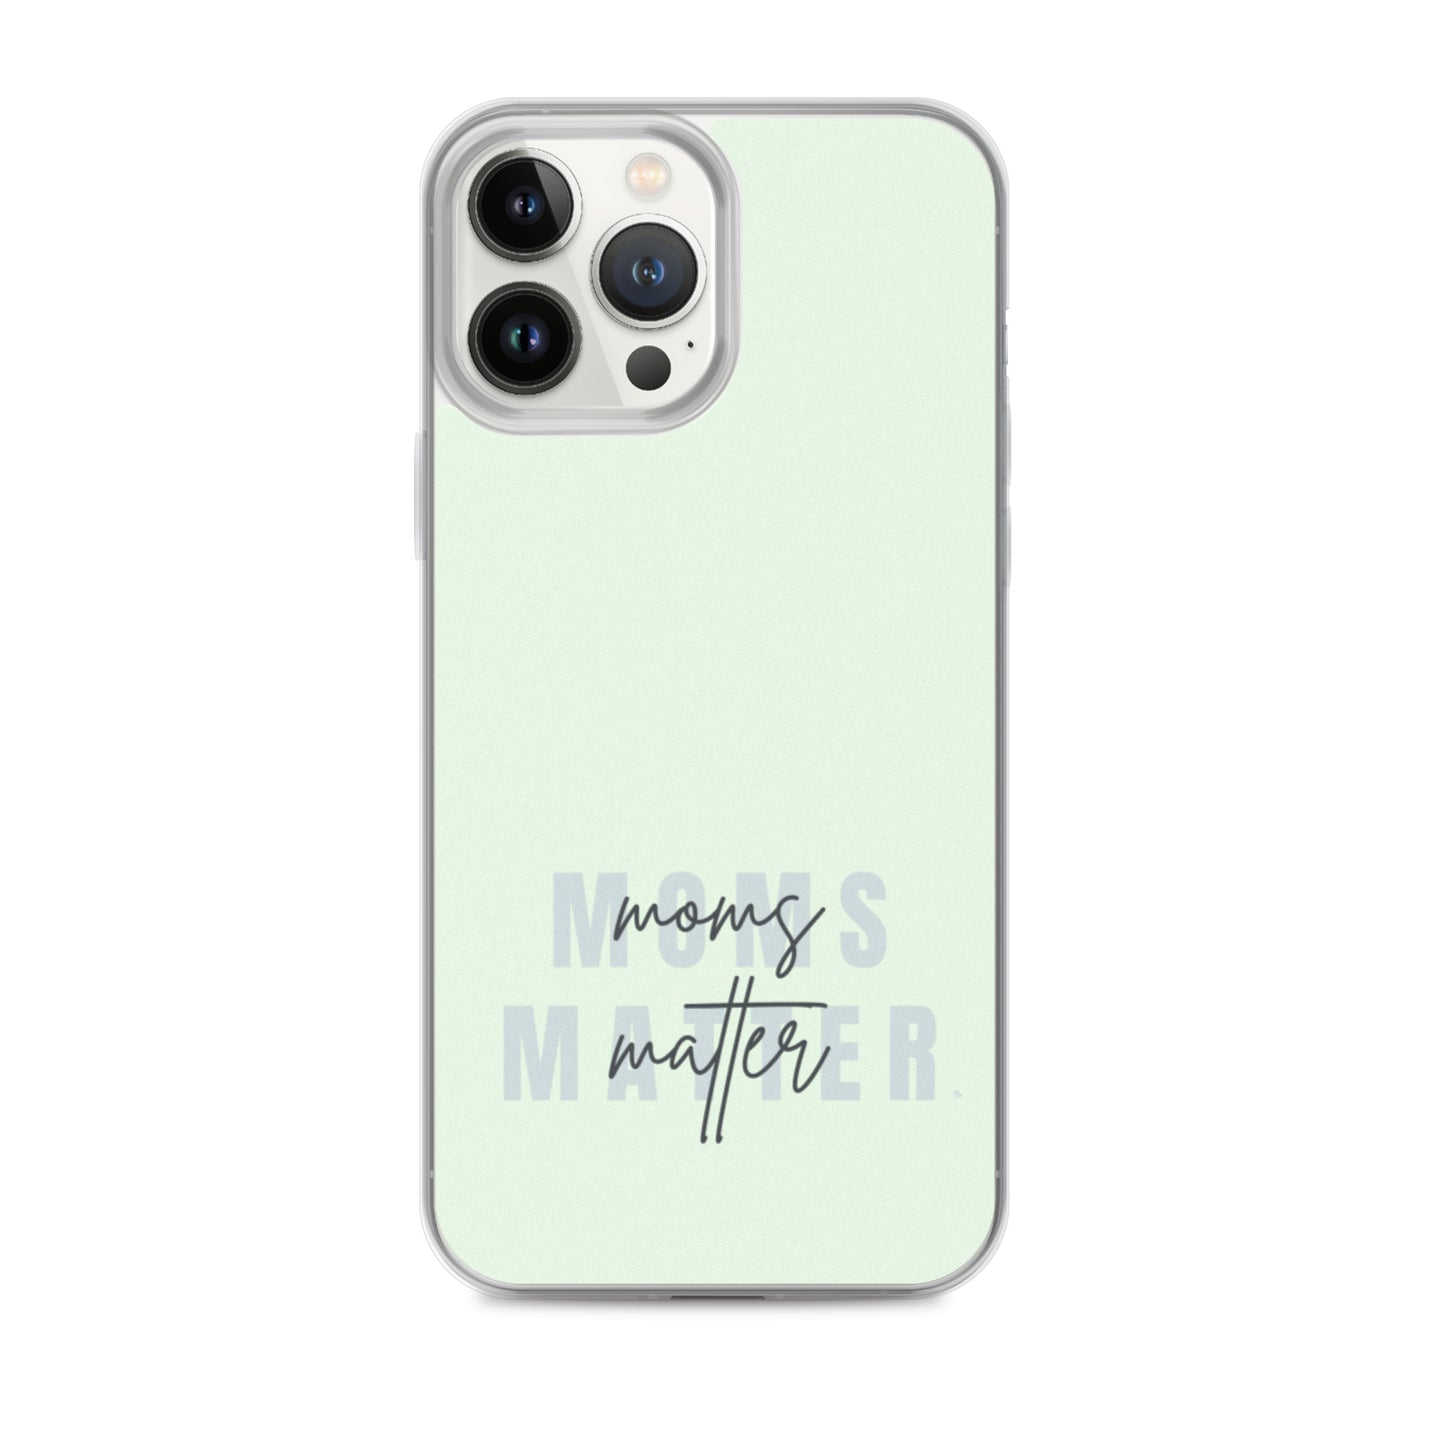 Moms Matter iPhone Case